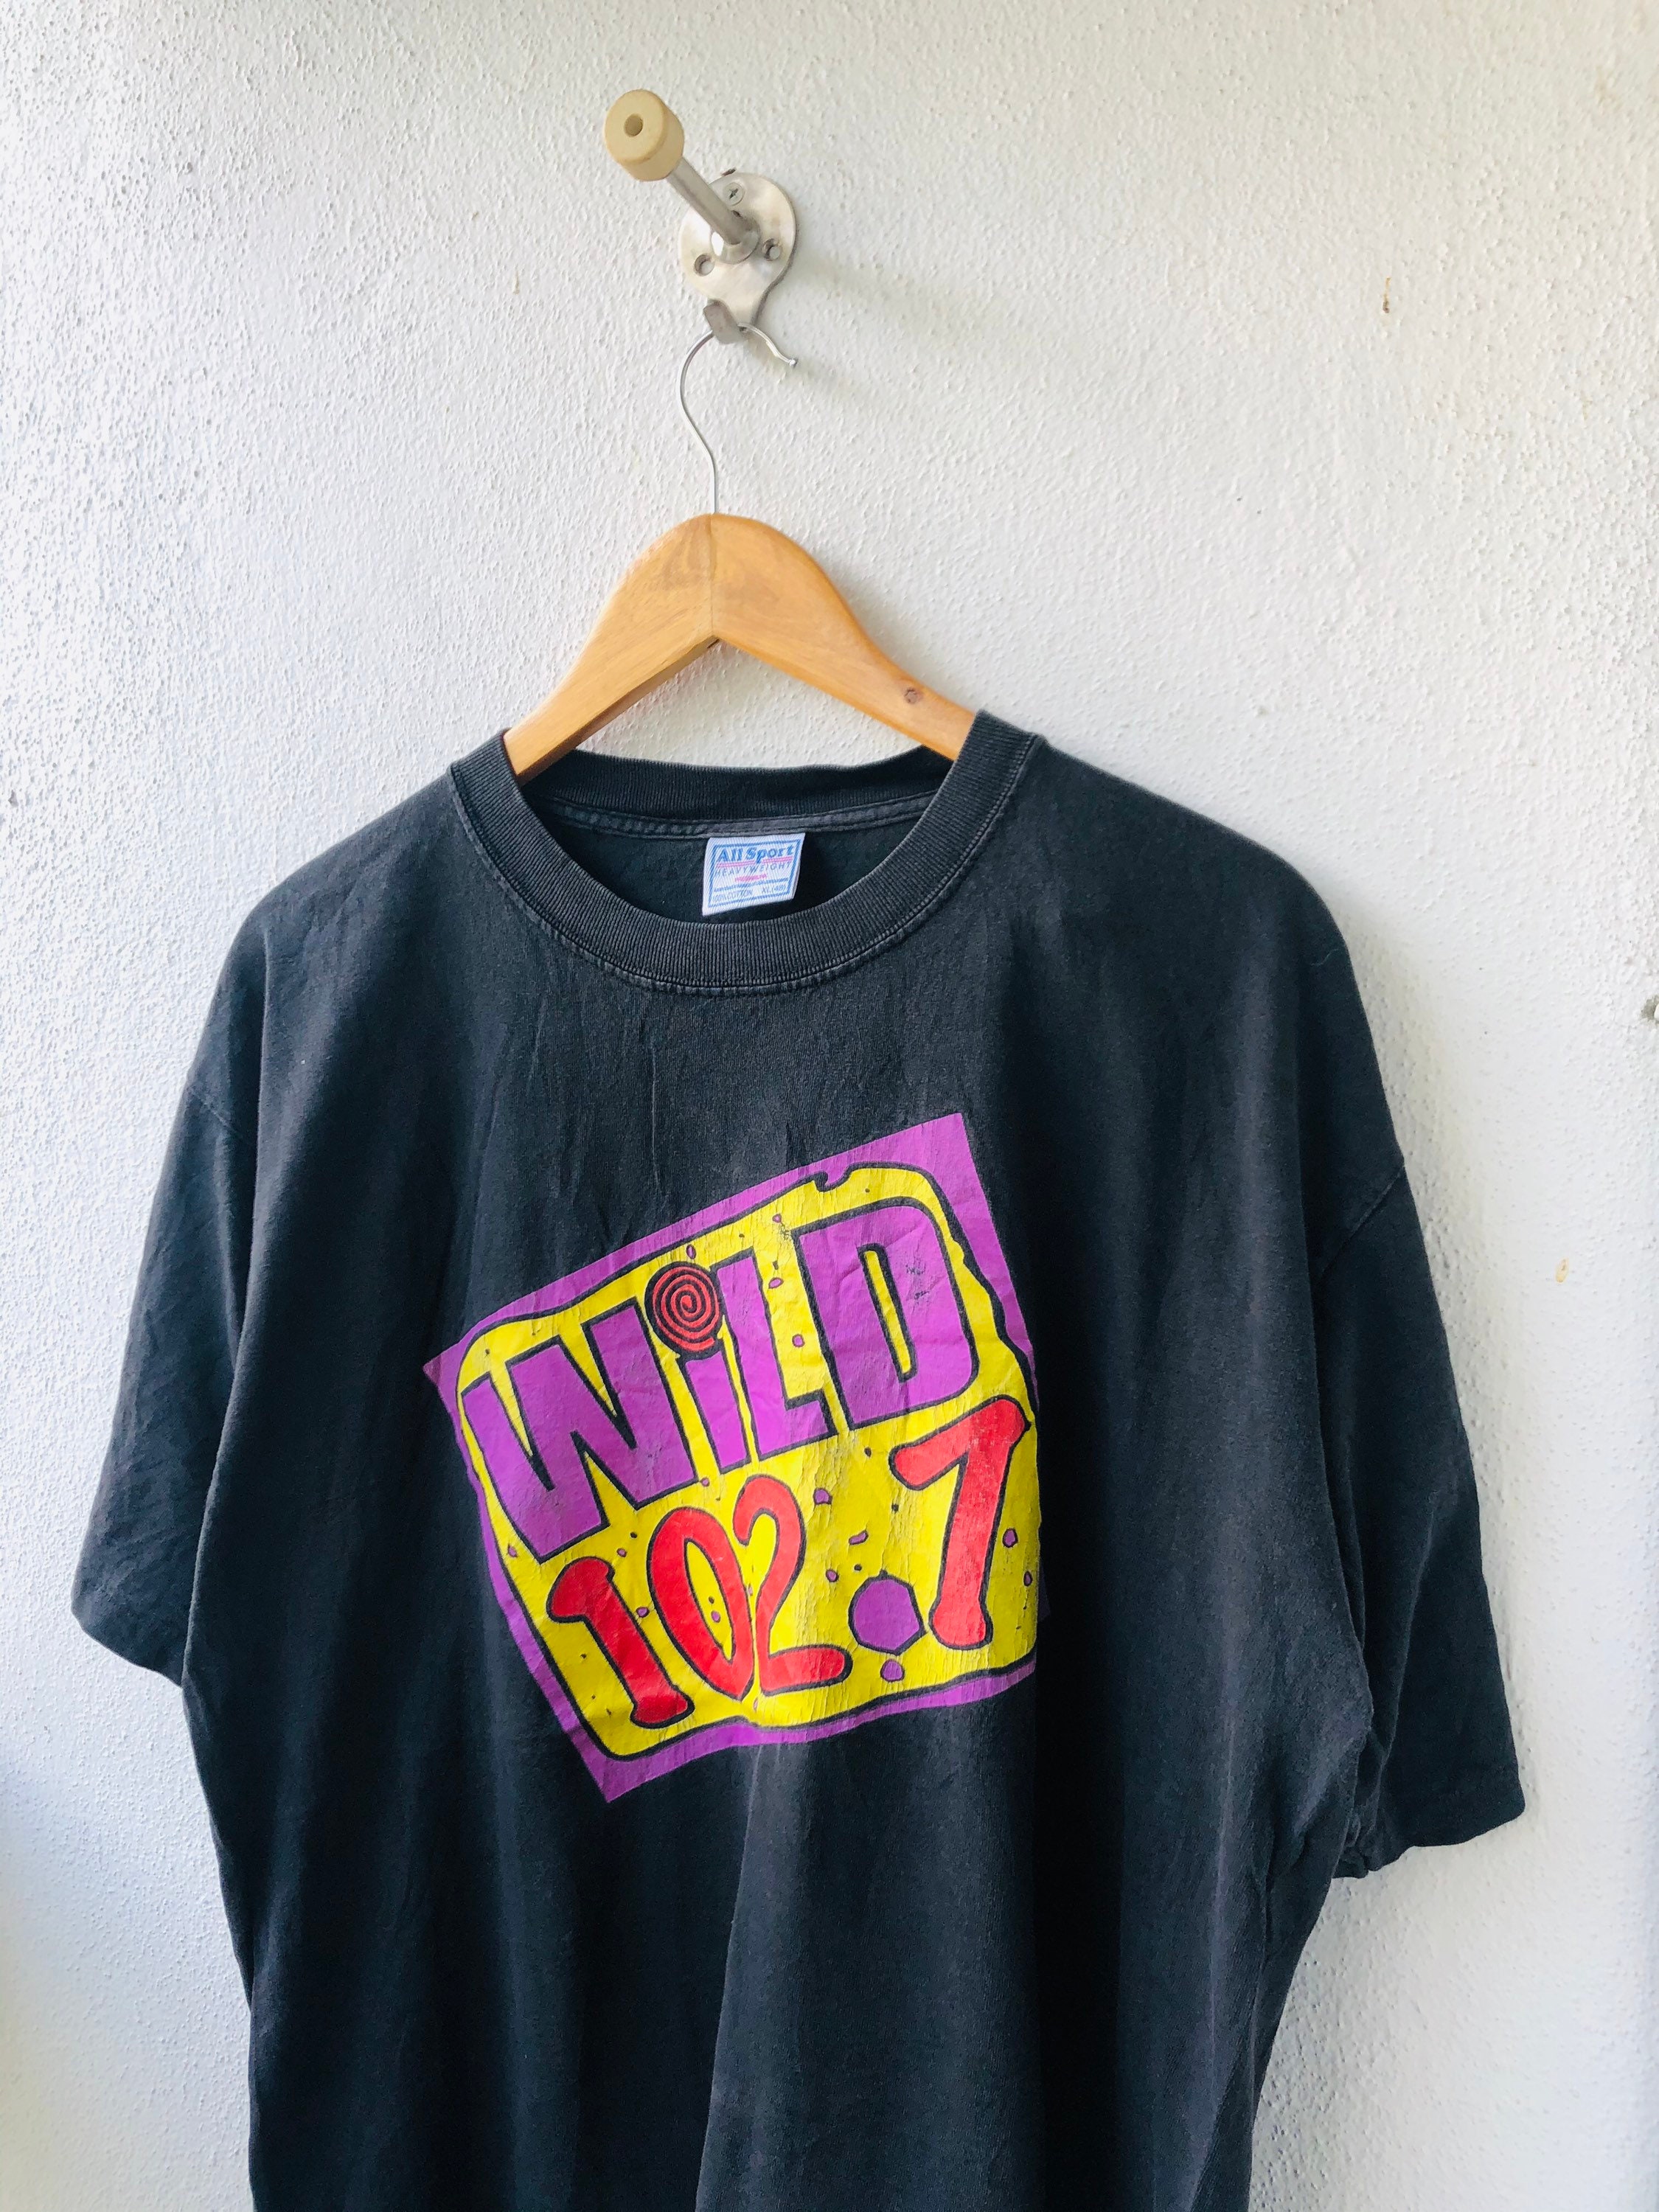 Vintage Original Early 00s KTFM Wild 102.7 Promo T-shirt - Etsy